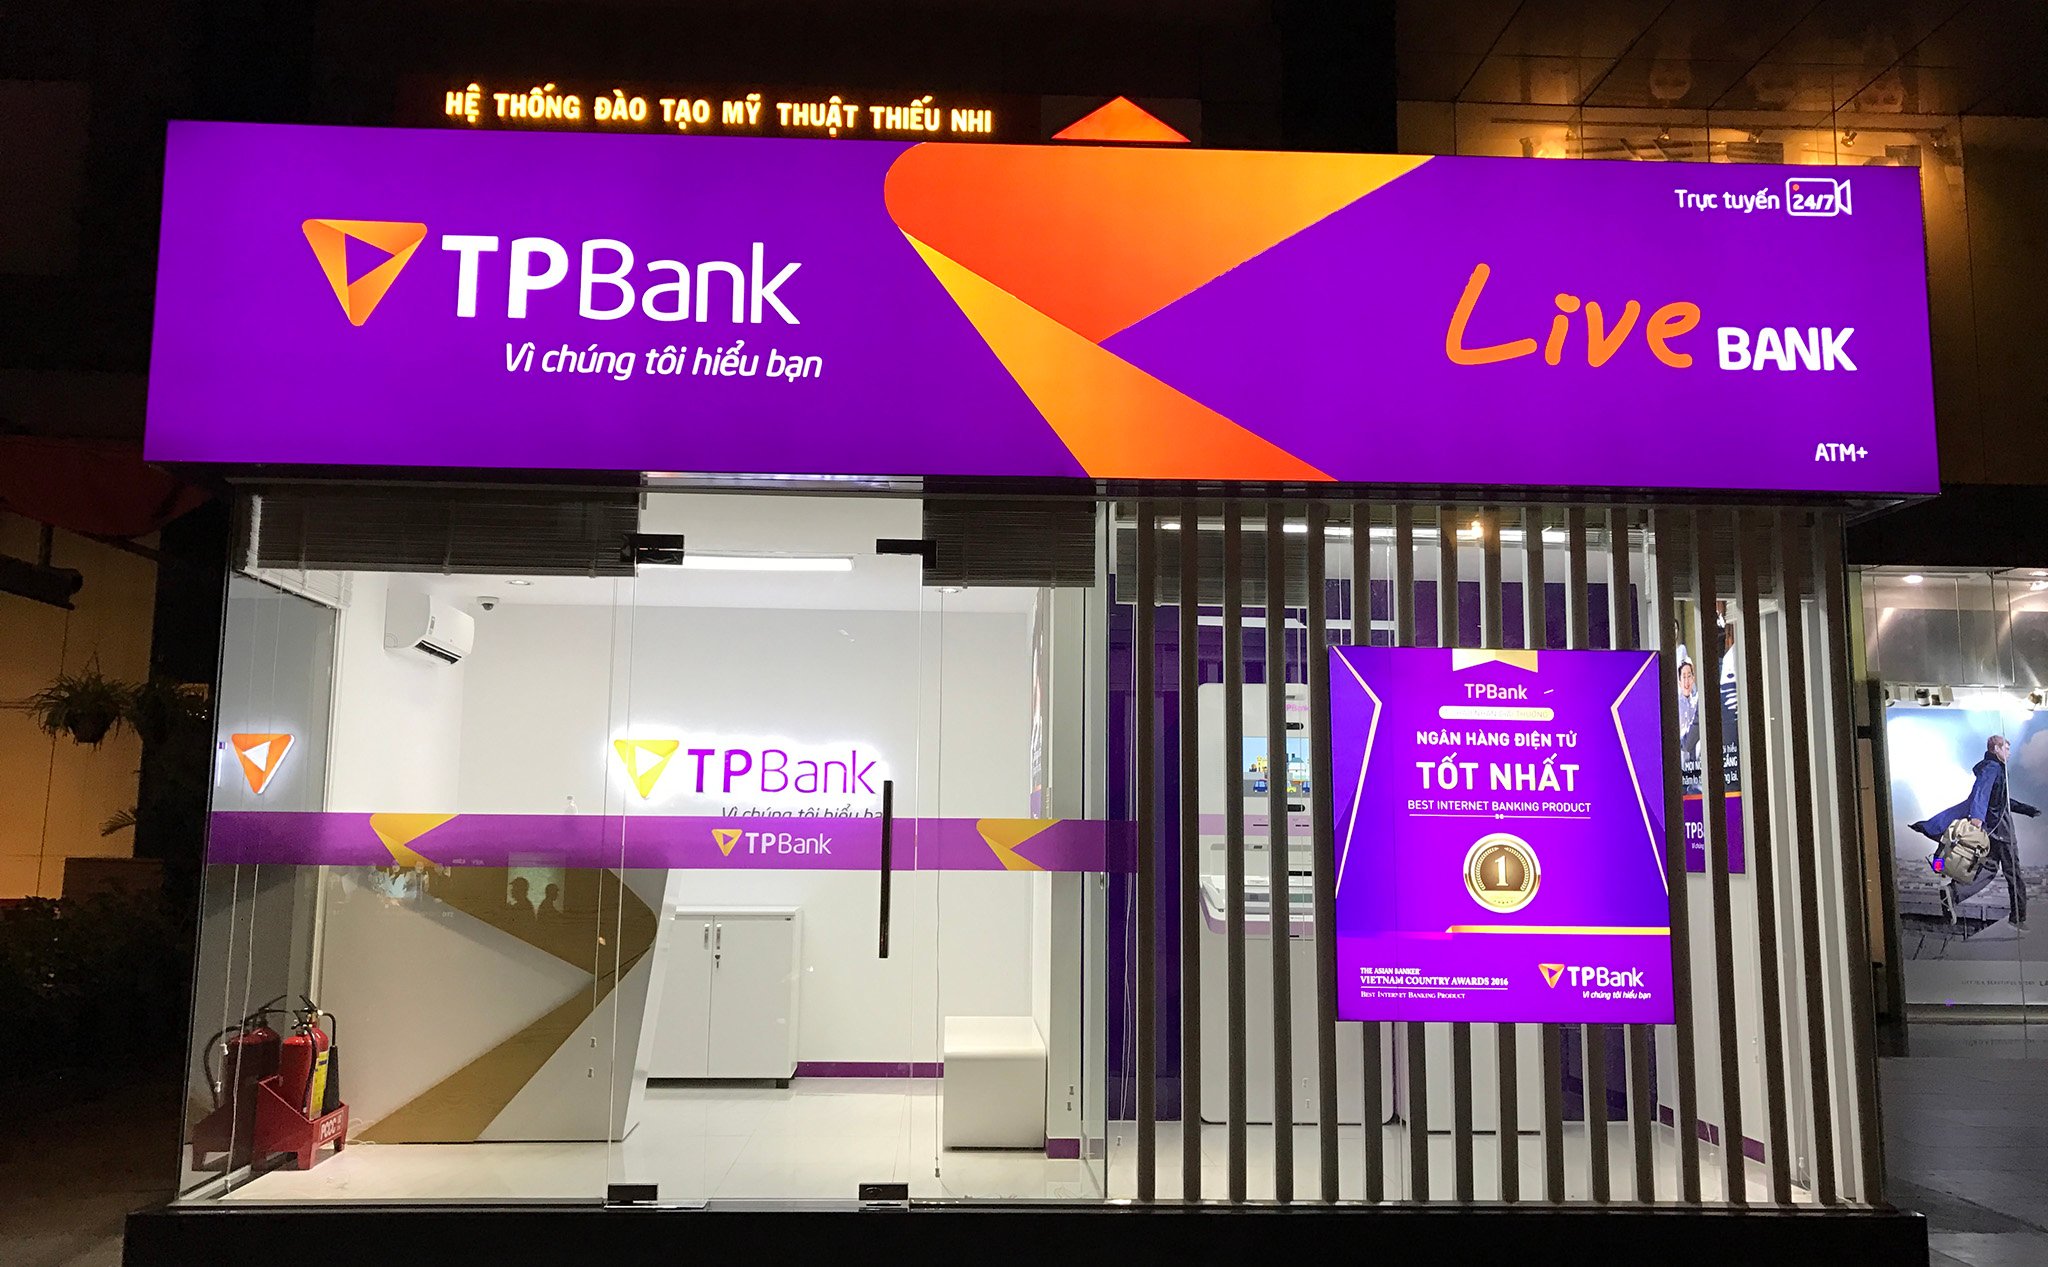 live bank tpbank